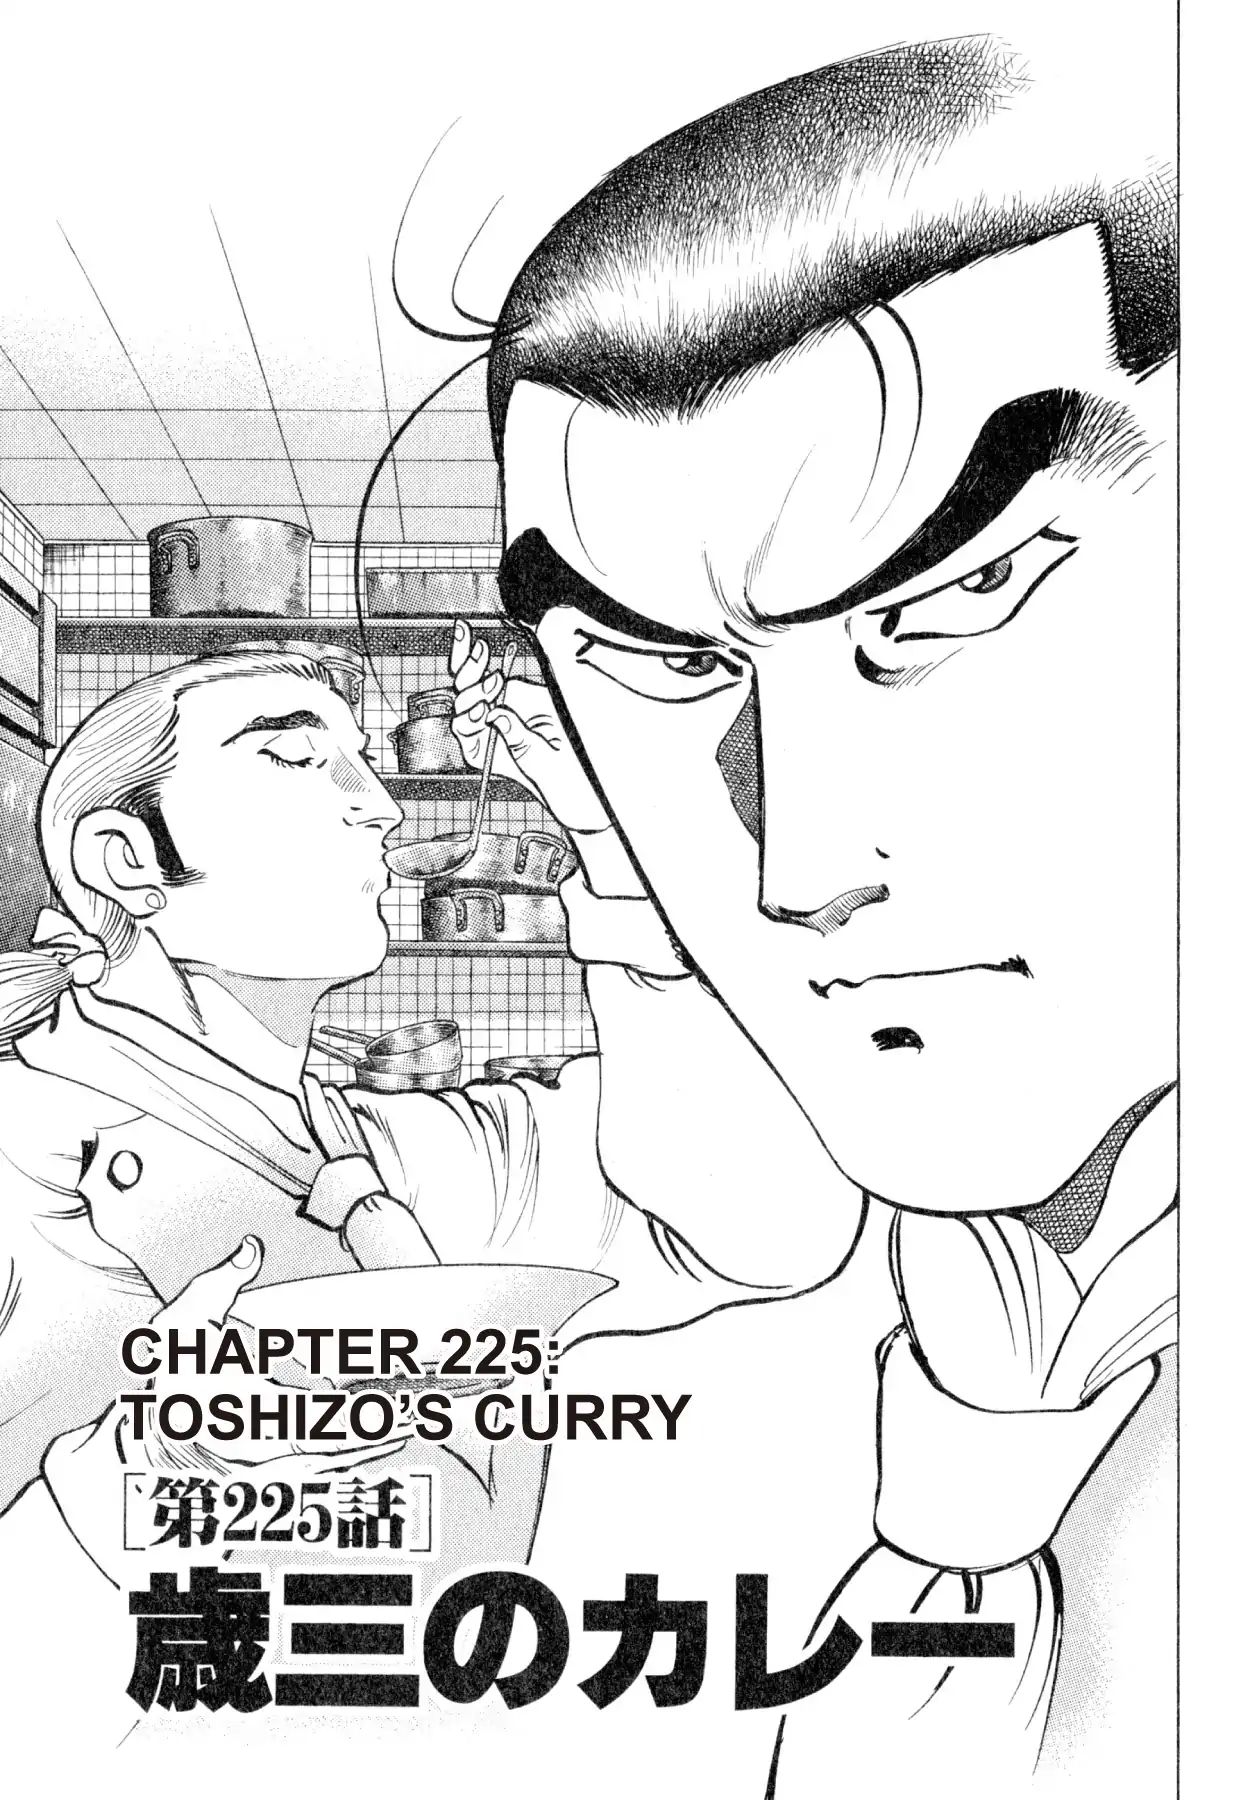 Shoku King VOL.24 CHAPTER 225: TOSHIZO'S CURRY